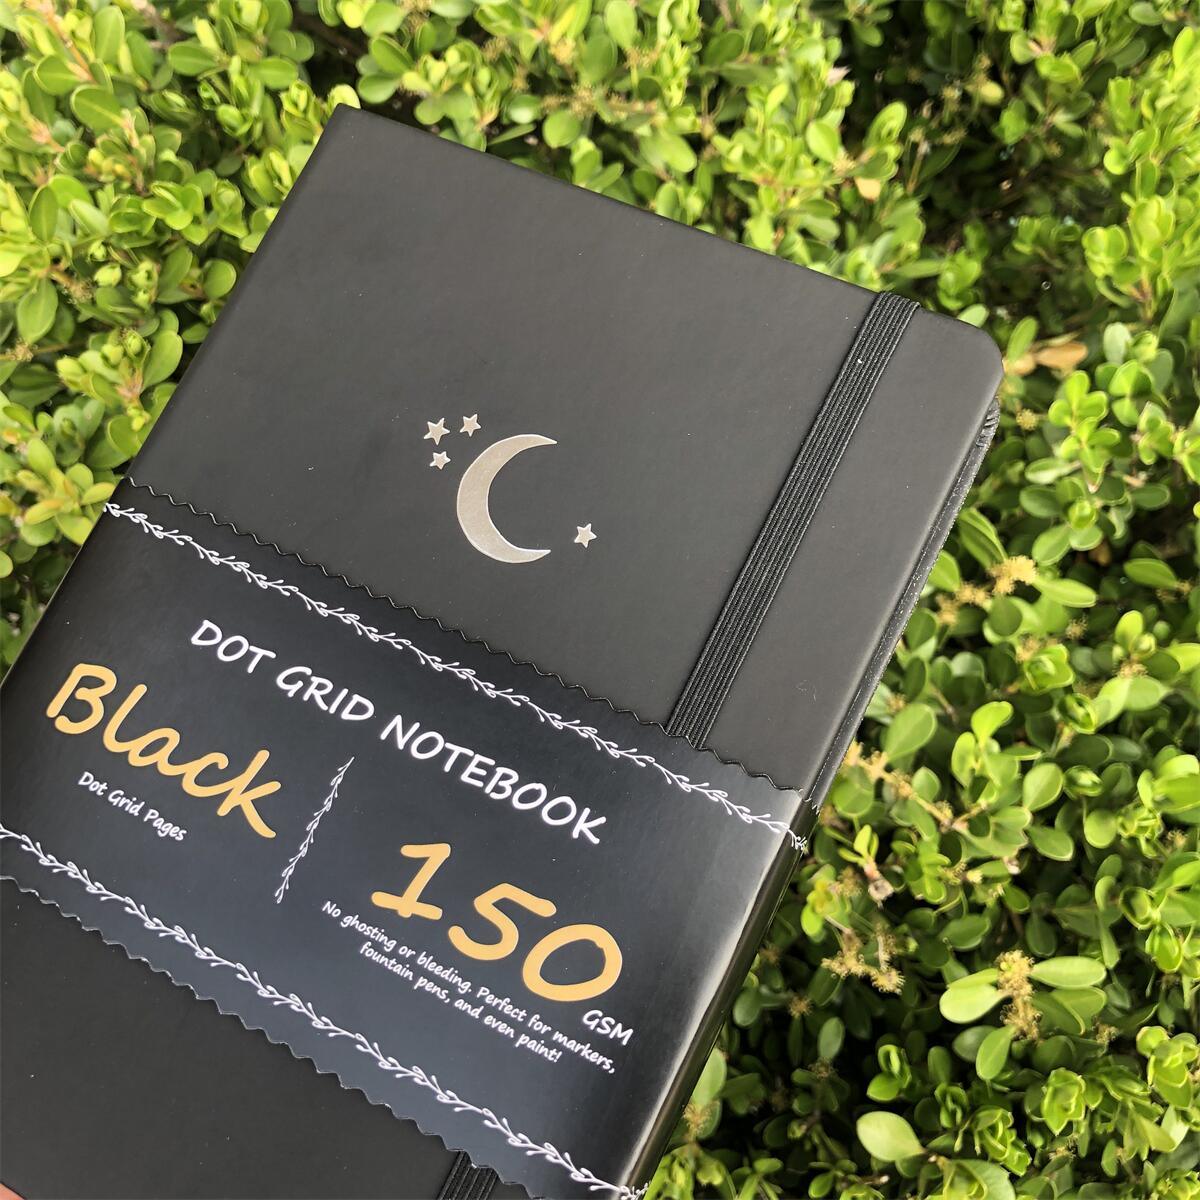 A5 Black Paper Bullet Journal Dot Grid Notebook - Moon Stars